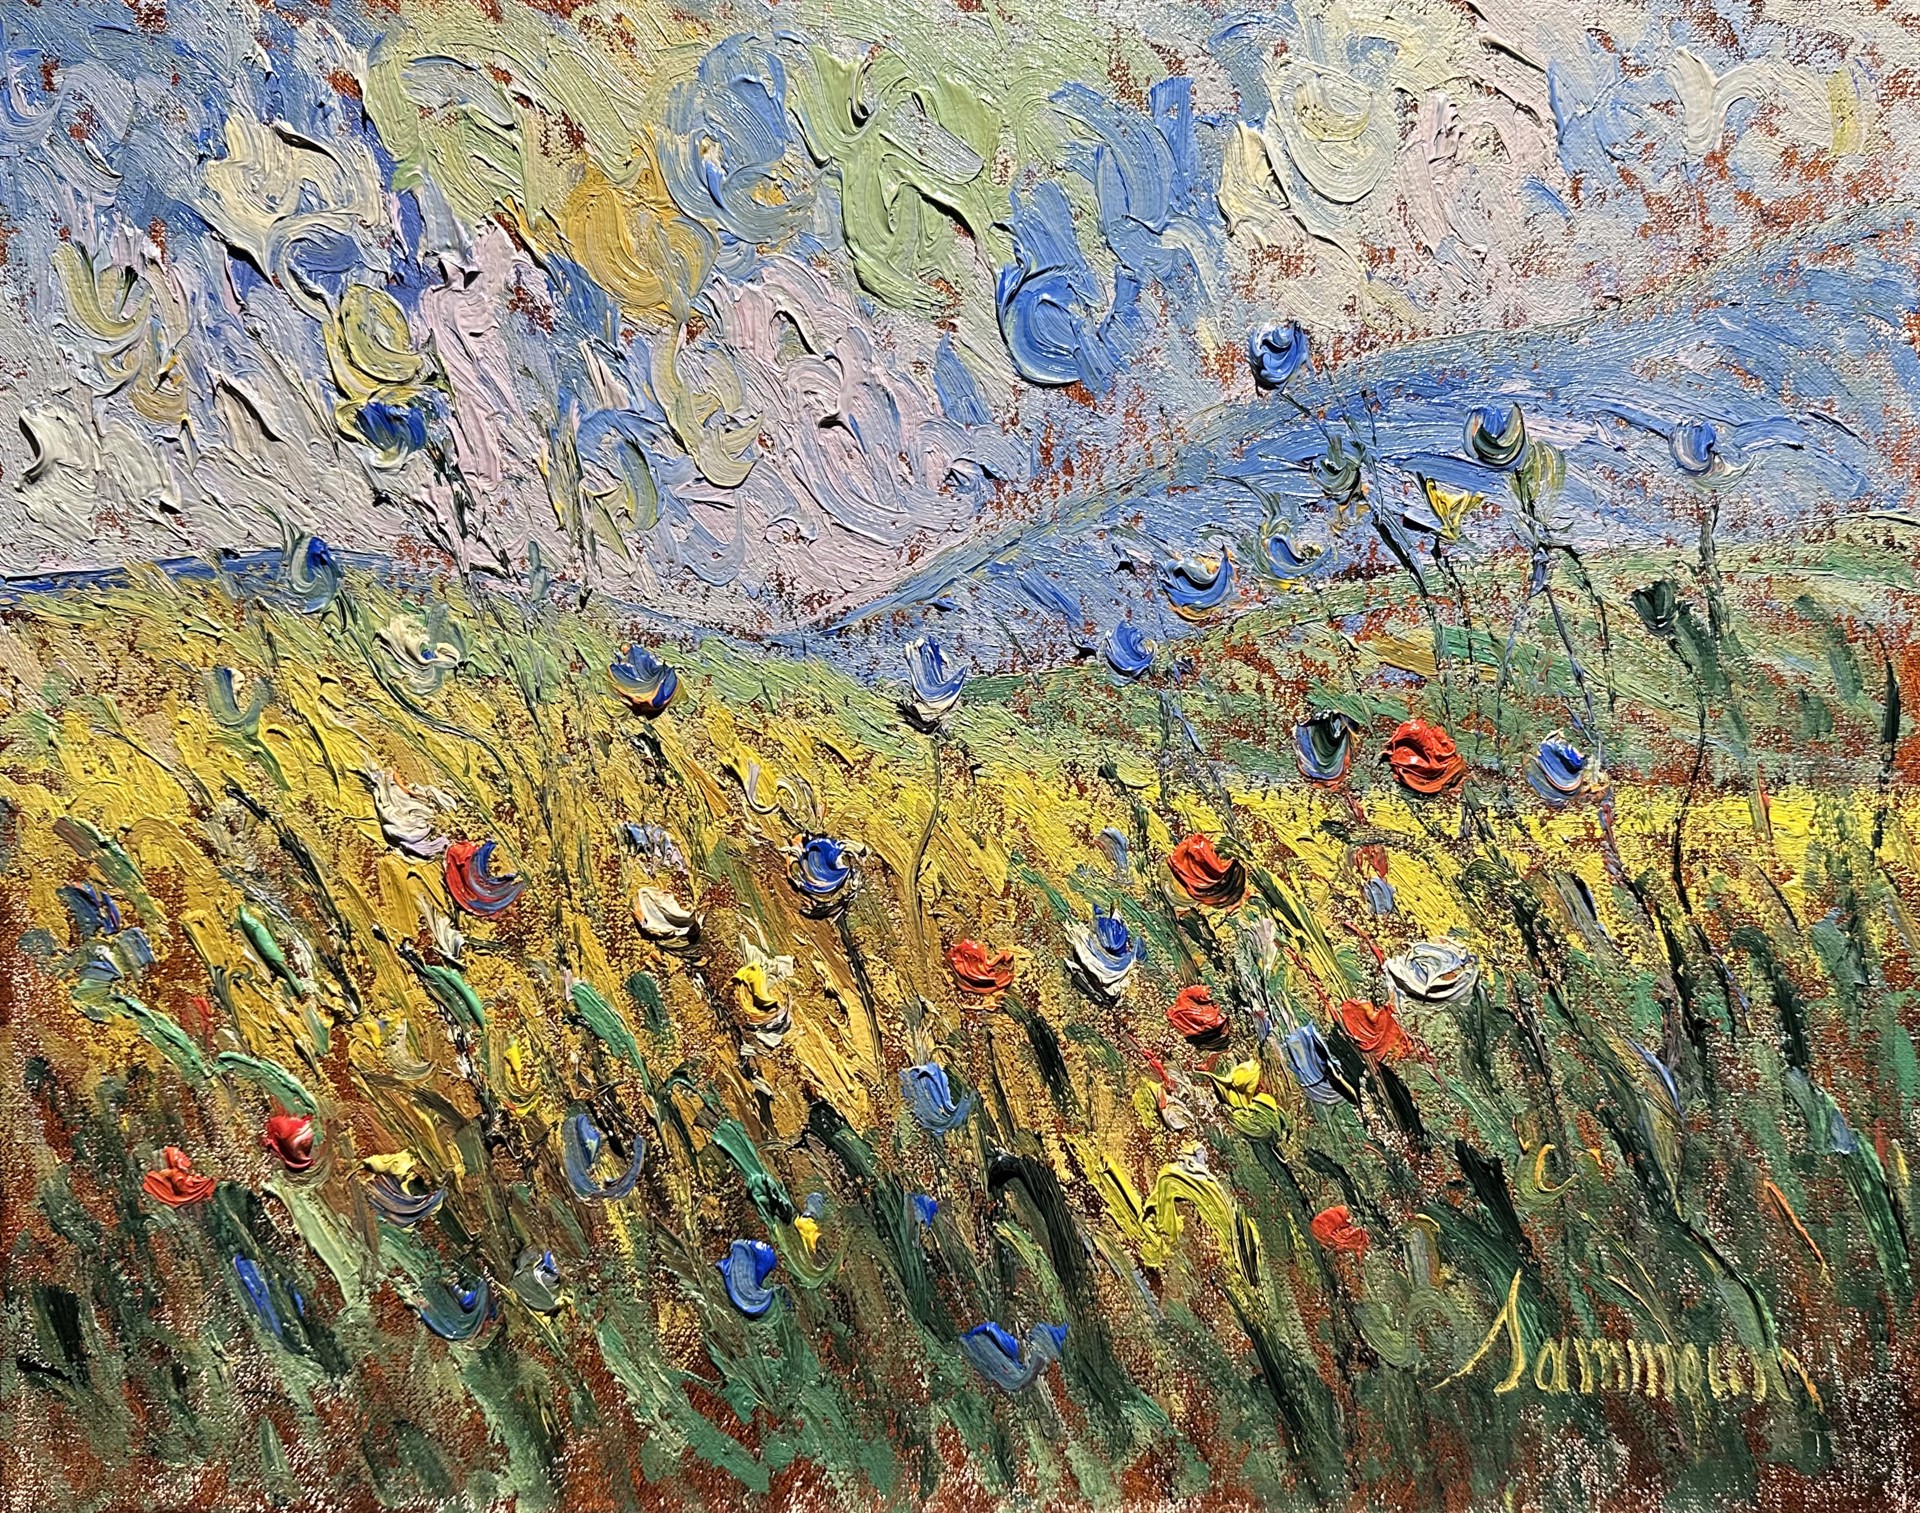 Wild blue flowers and wheat field, 16x20 by Samir Sammoun